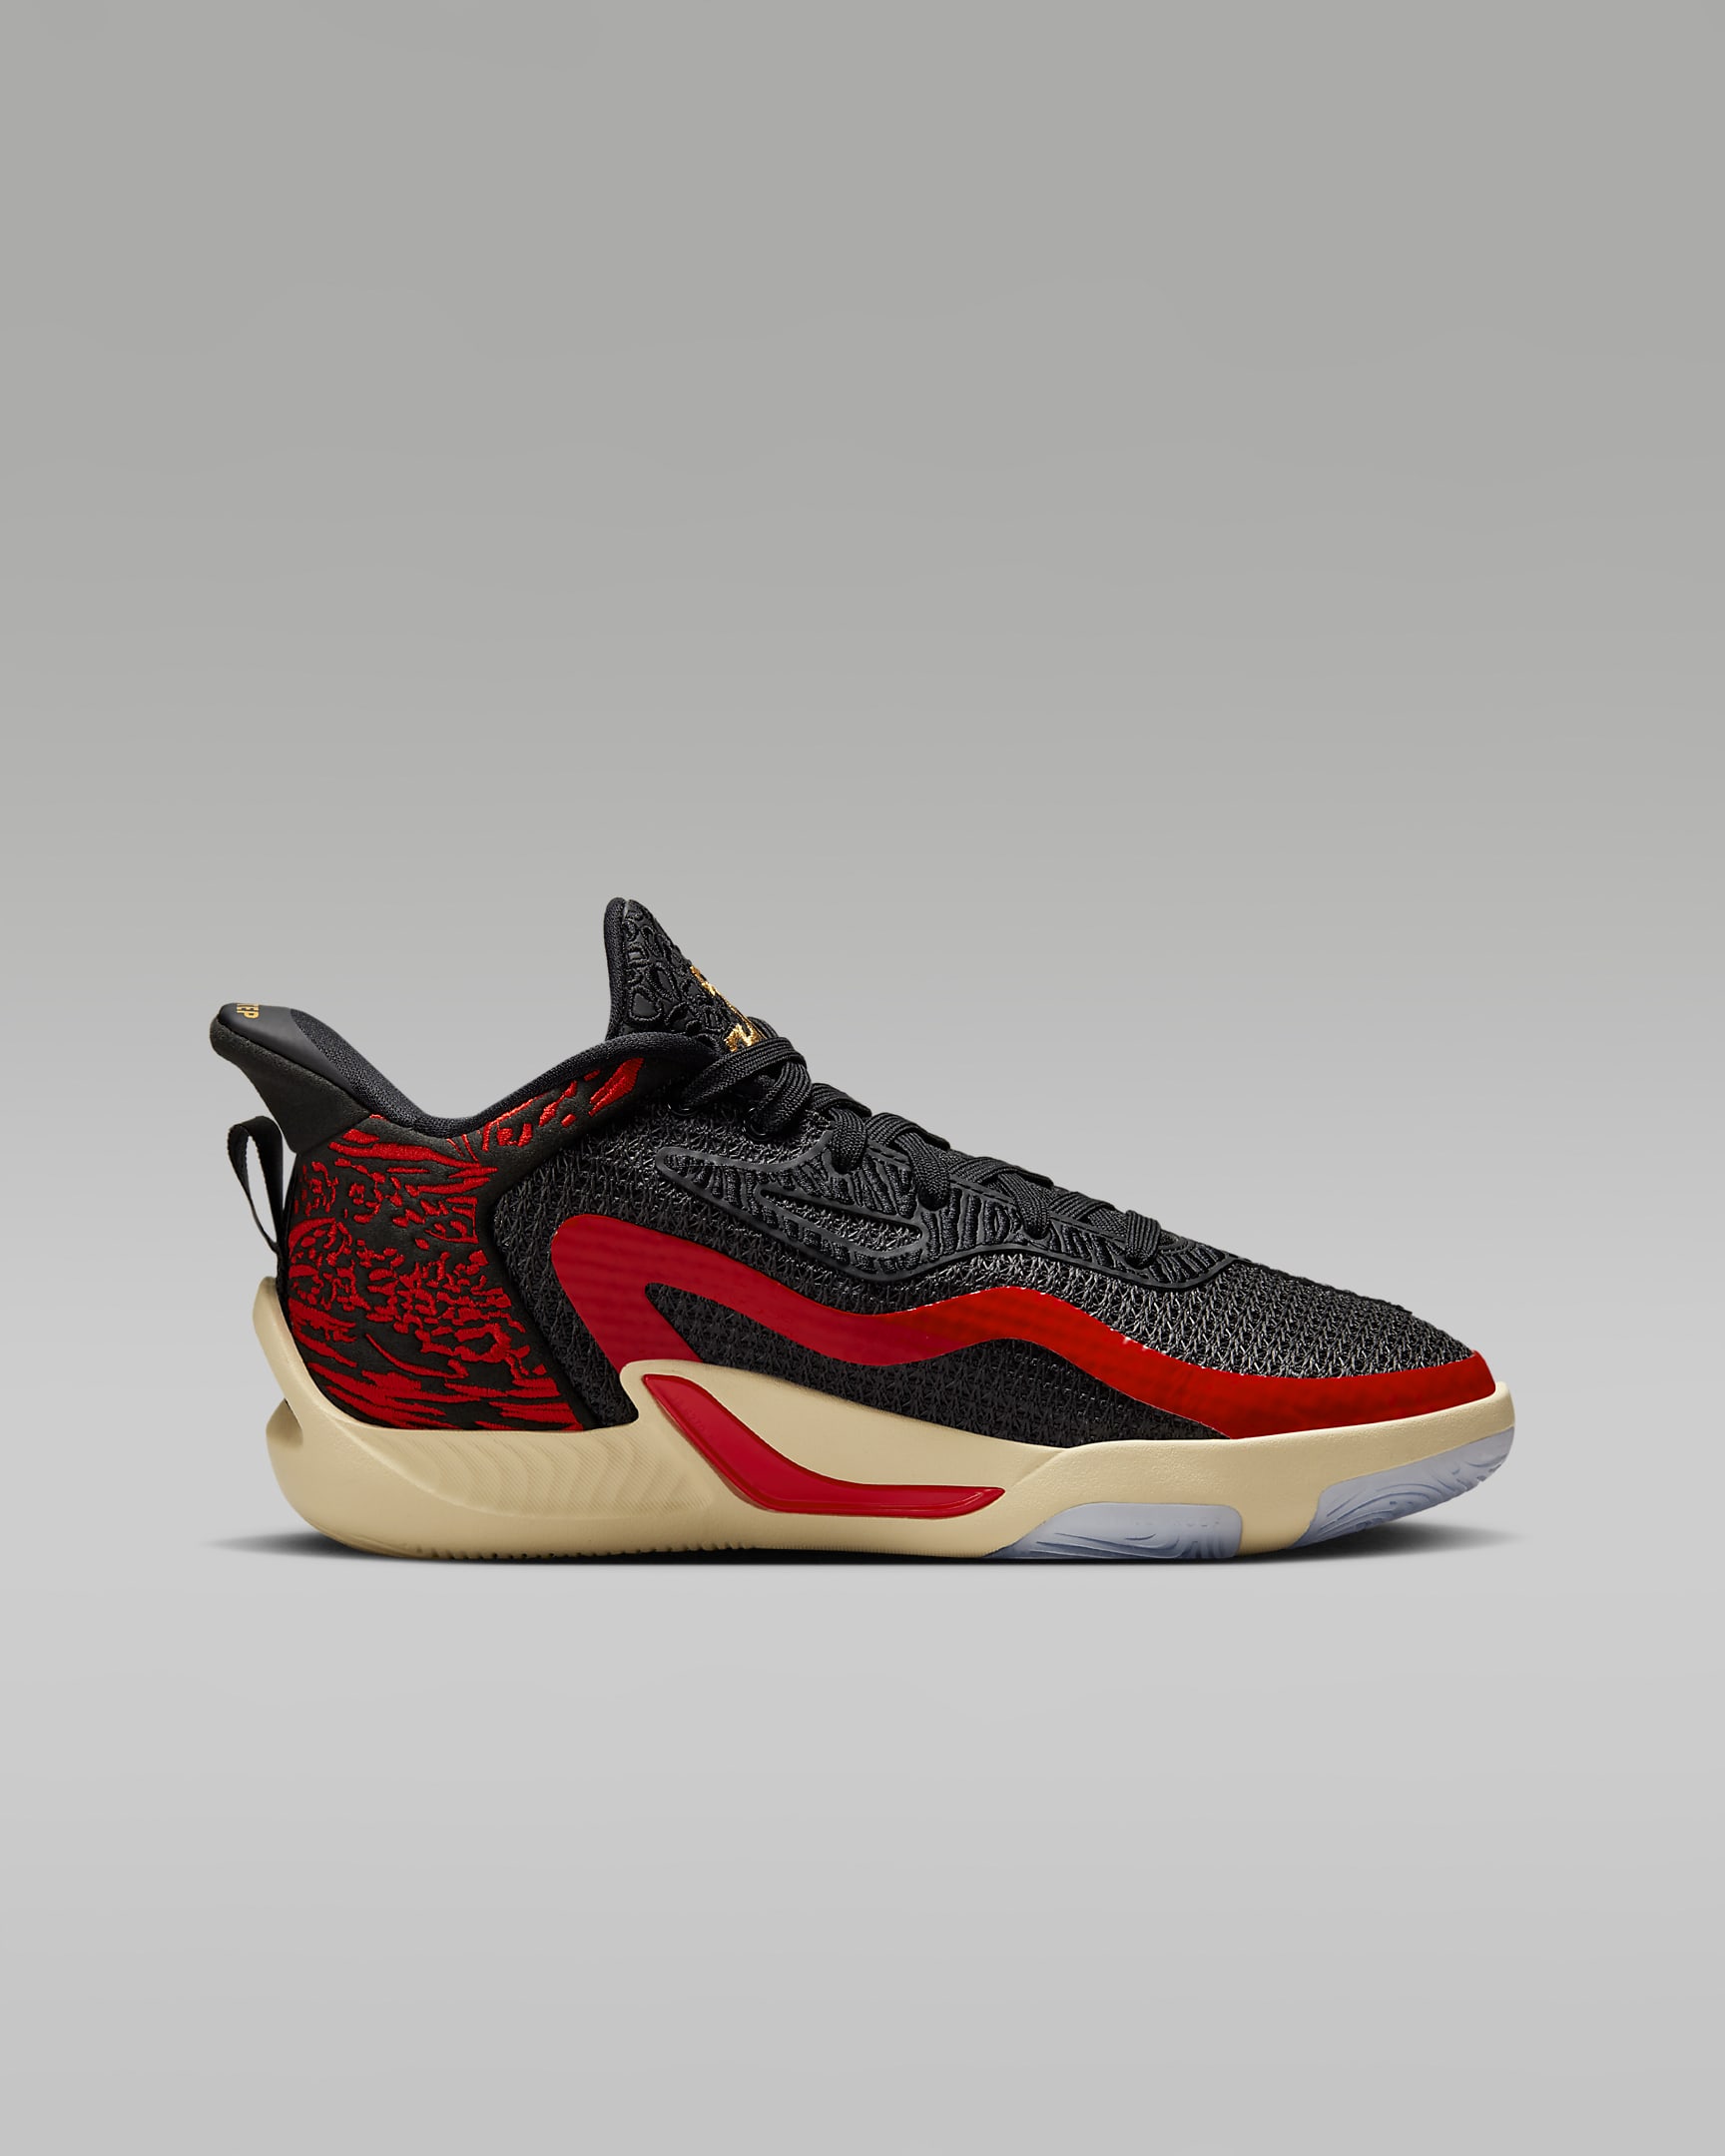 Tatum 1 'Zoo' Older Kids' Basketball Shoes. Nike BG